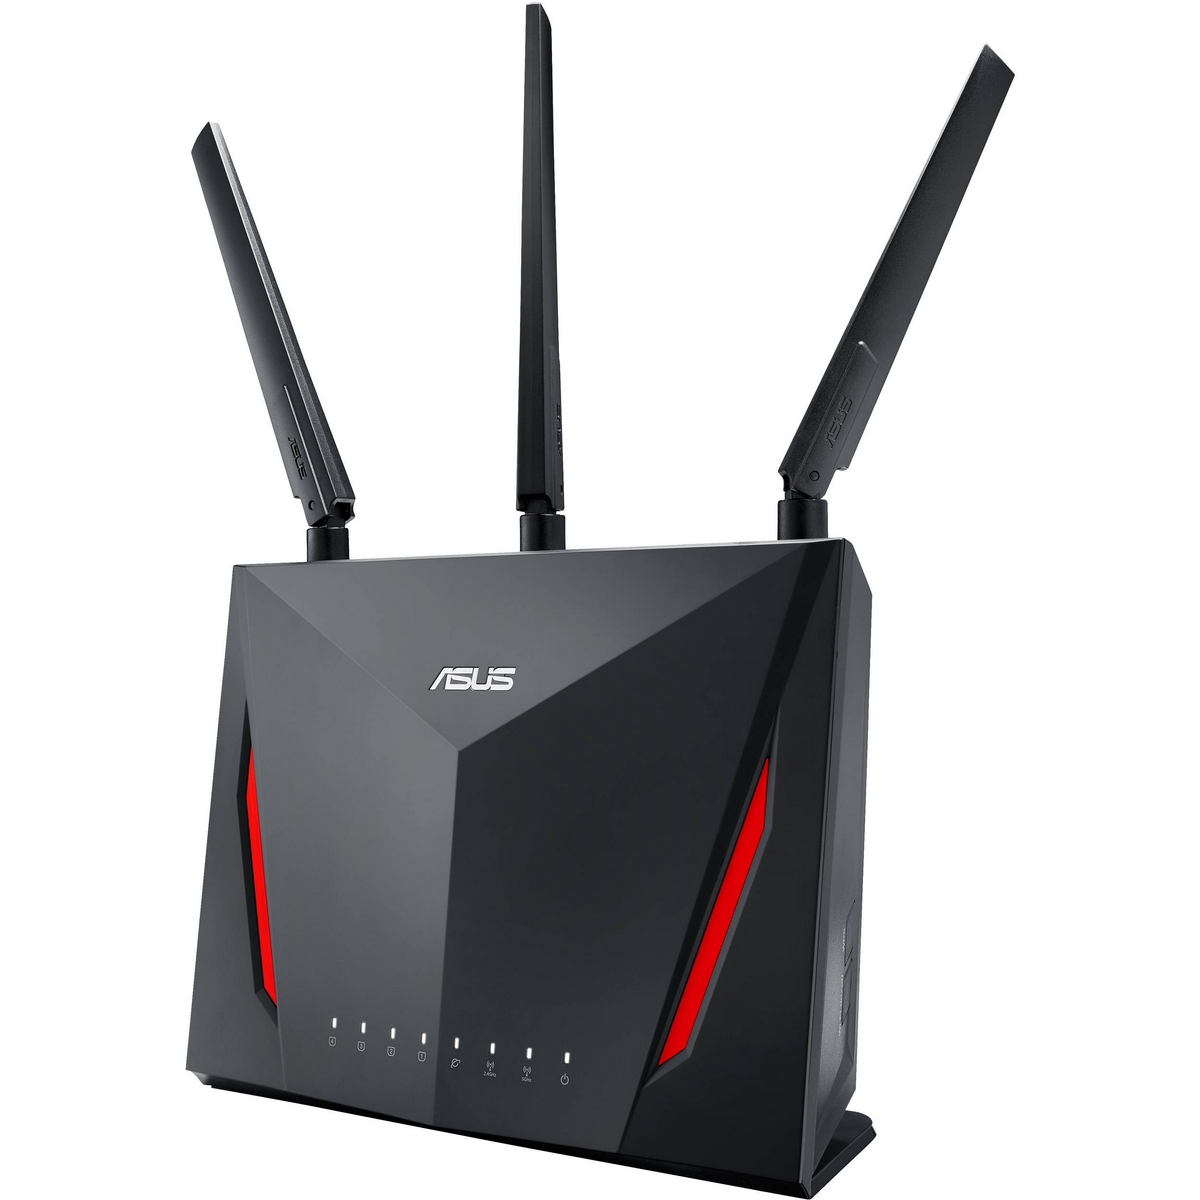 Asus - ASUS RT-AC86U Dual Band Wireless Router AC2900 WiFi with 4-port Gigabit LAN